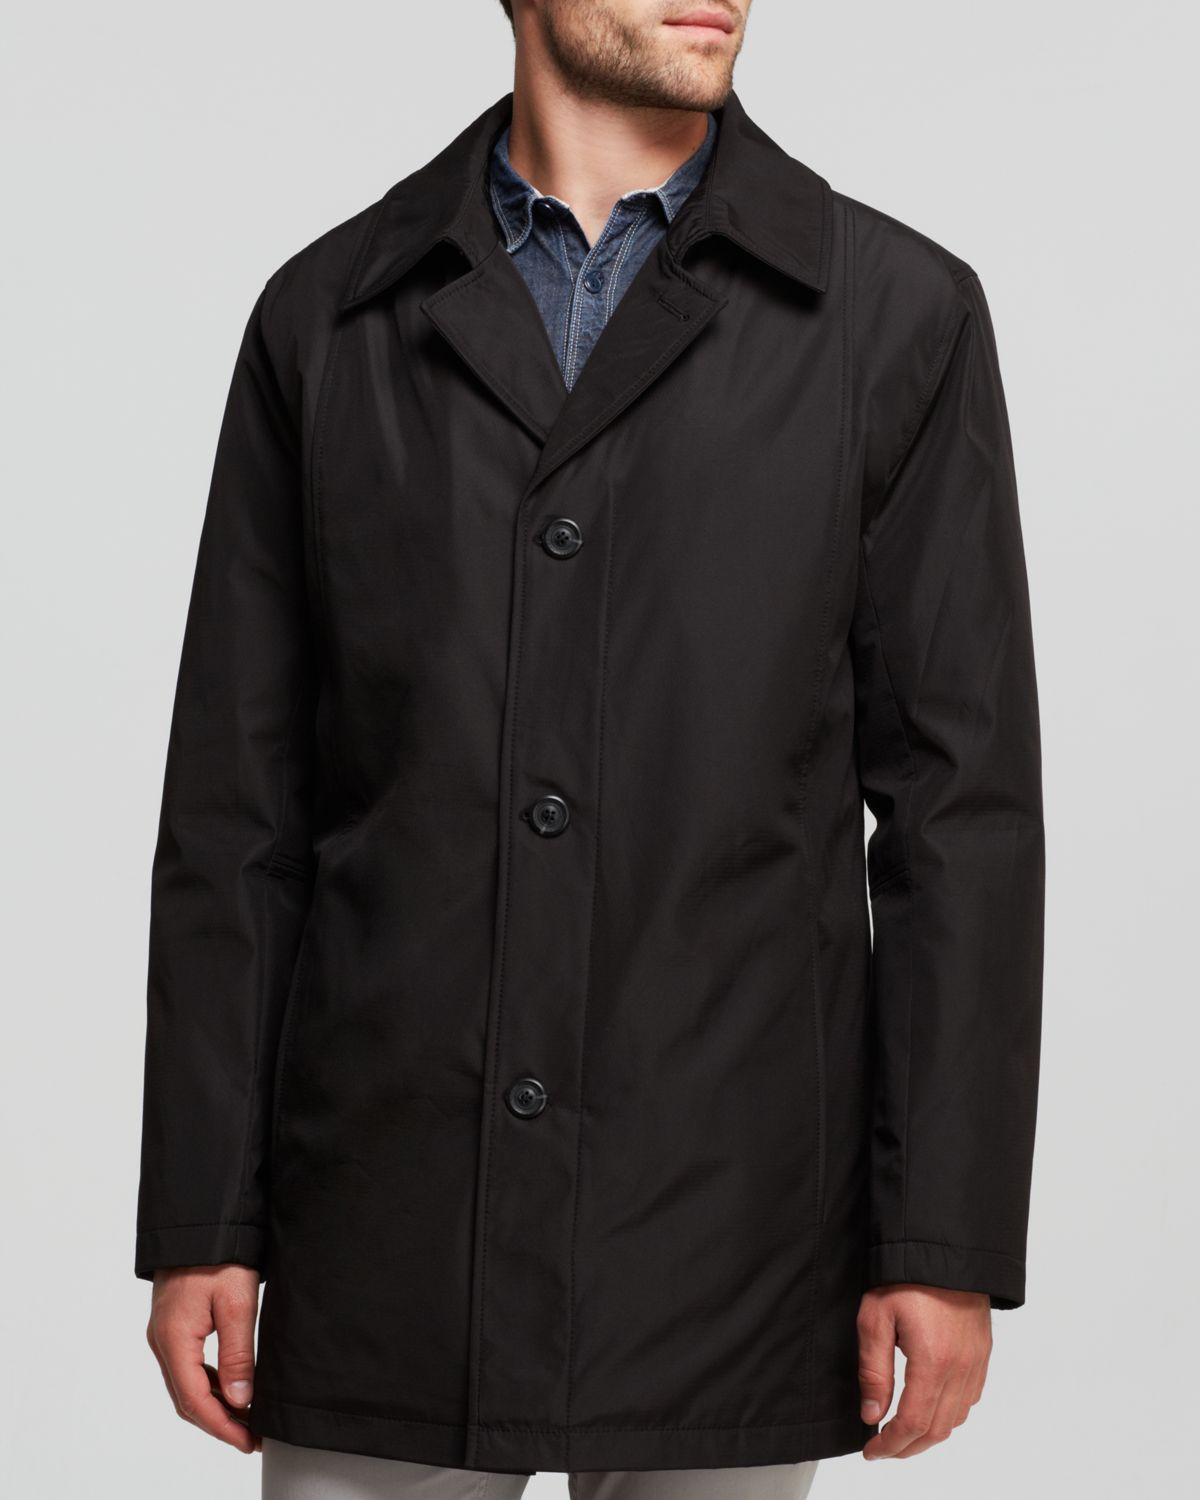 Marc New York City Rain Chapman Jacket in Black for Men - Lyst